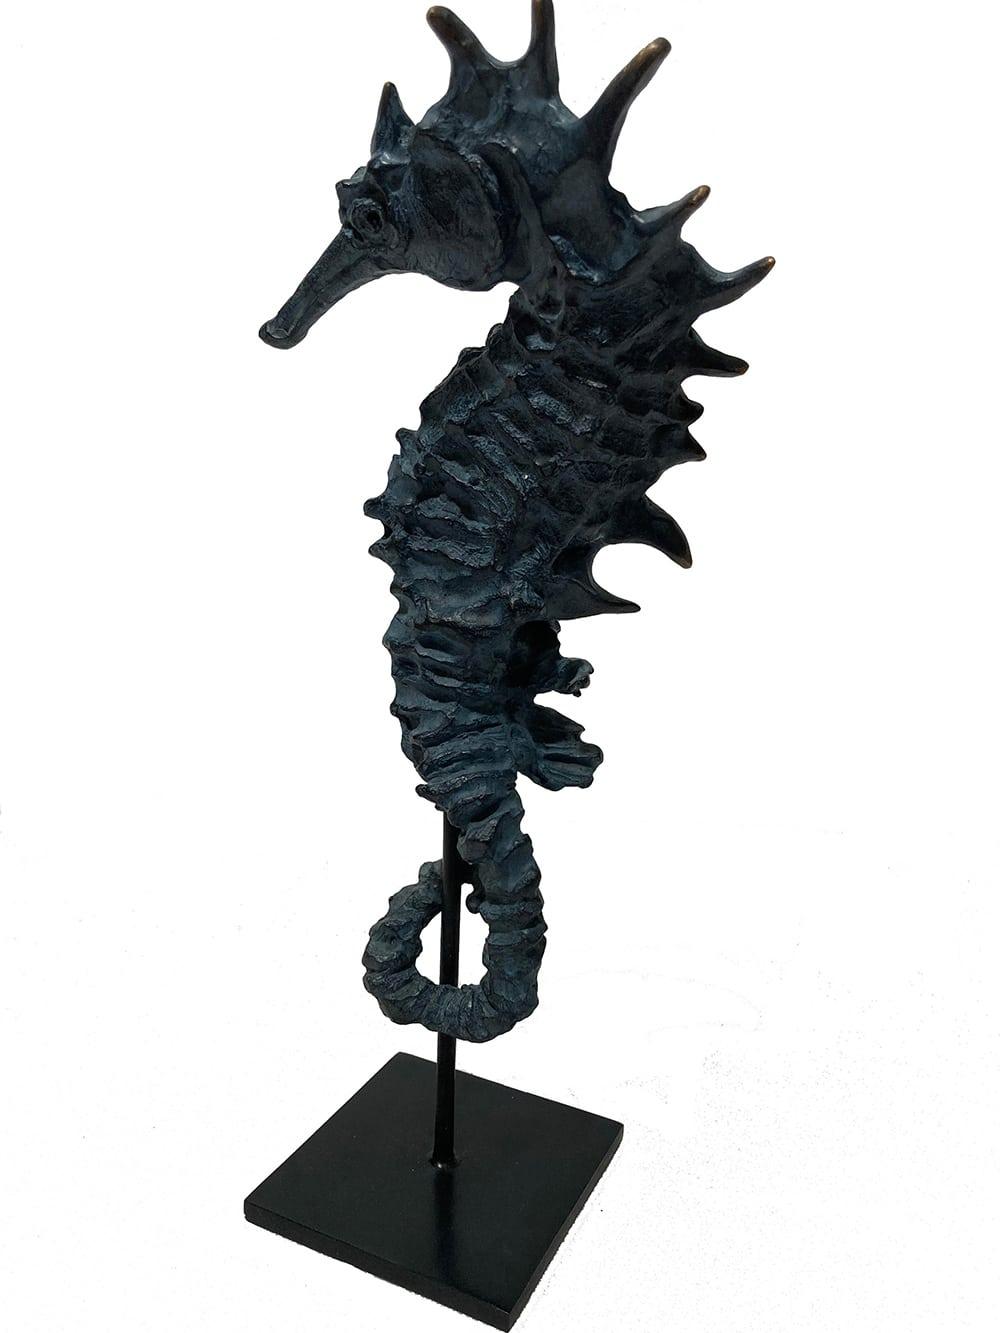 Ultramarine Seahorse II by Chésade - Bronze sculpture, animal art, sealife For Sale 1